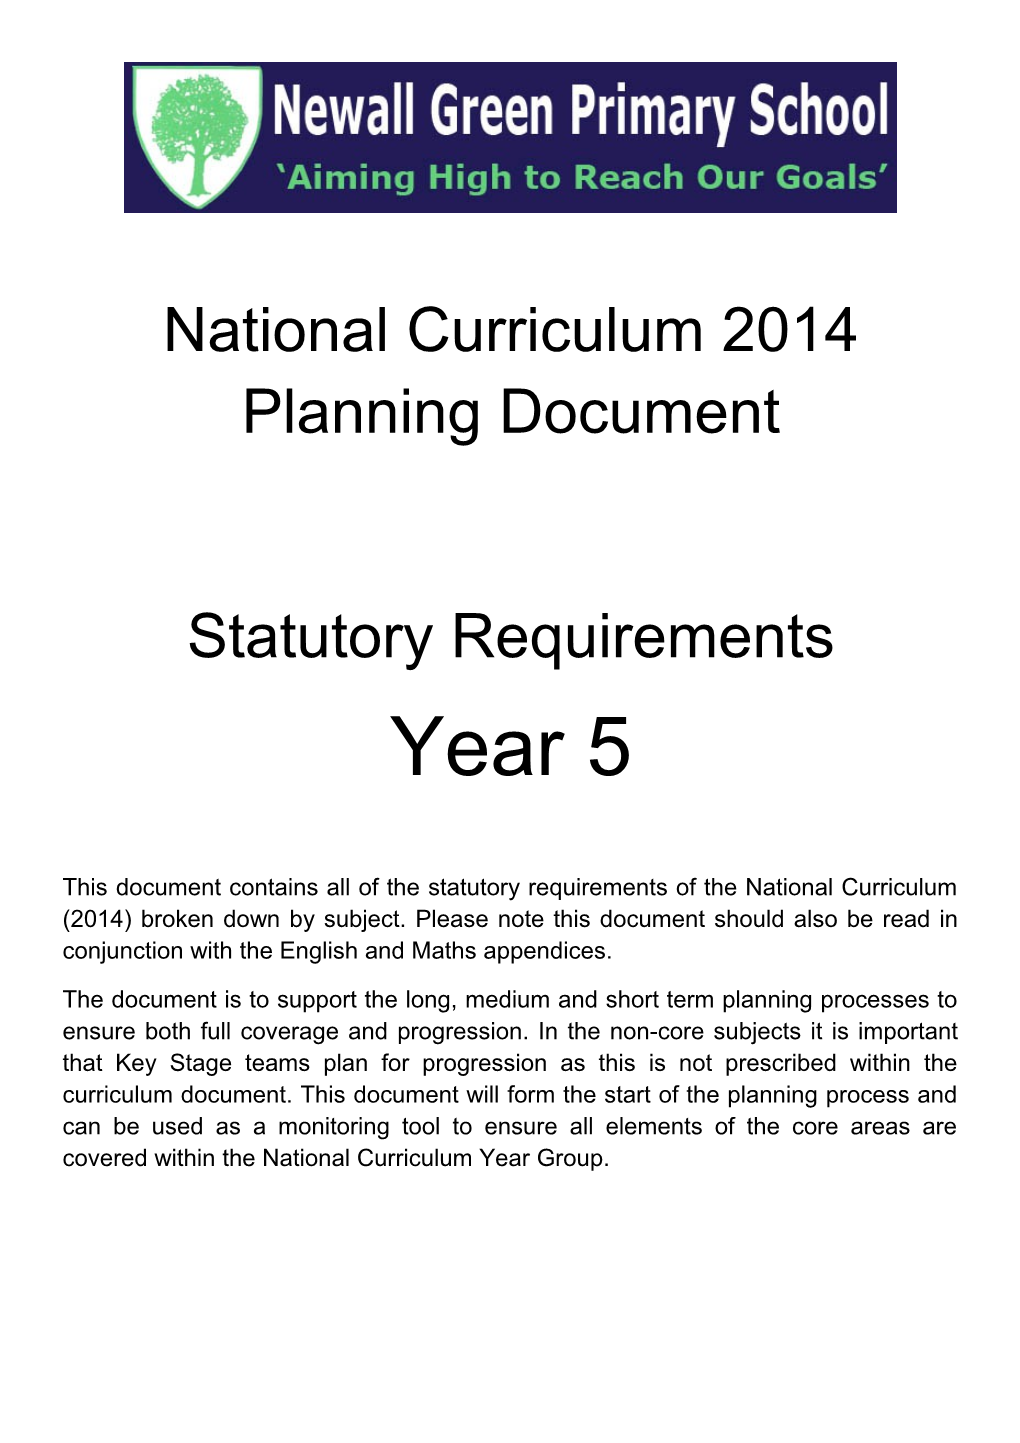 National Curriculum 2014 Planning Document